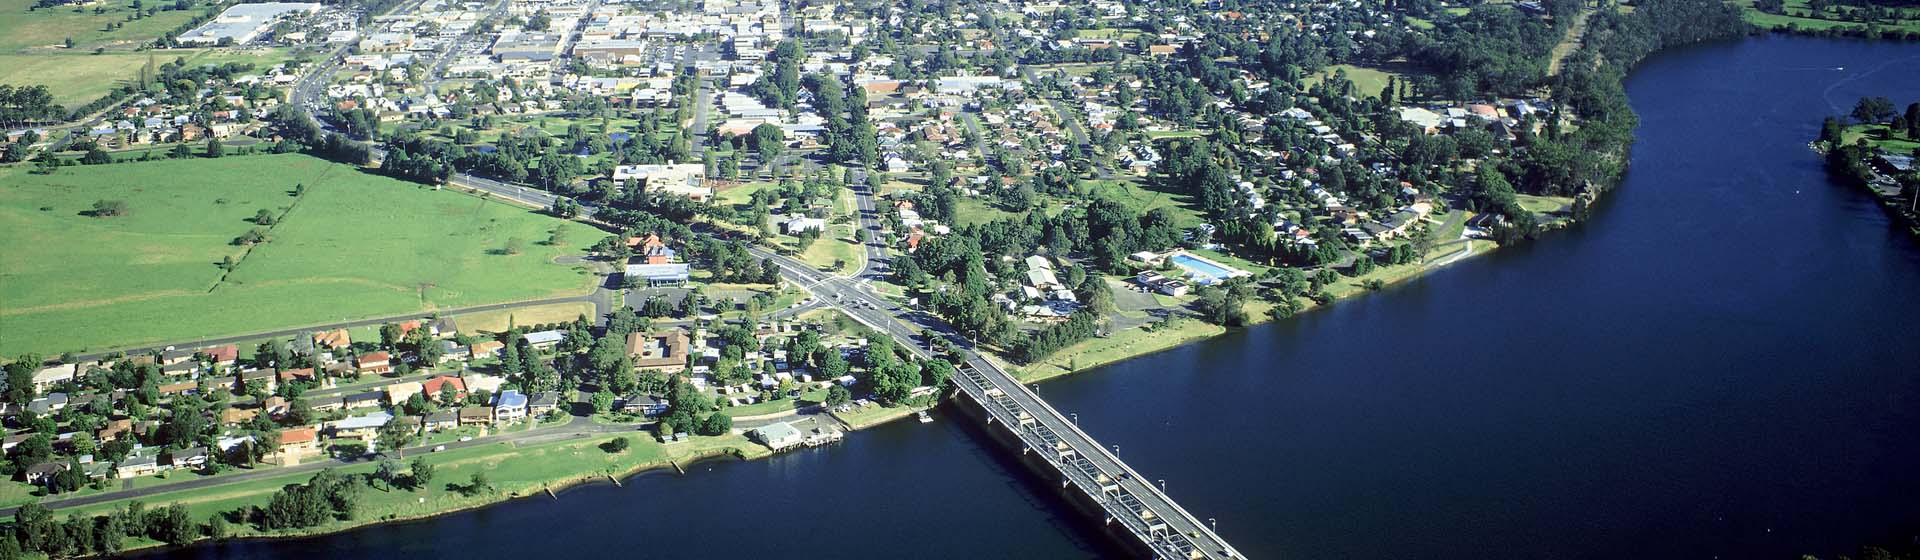 An aerial shot of a town in Australia